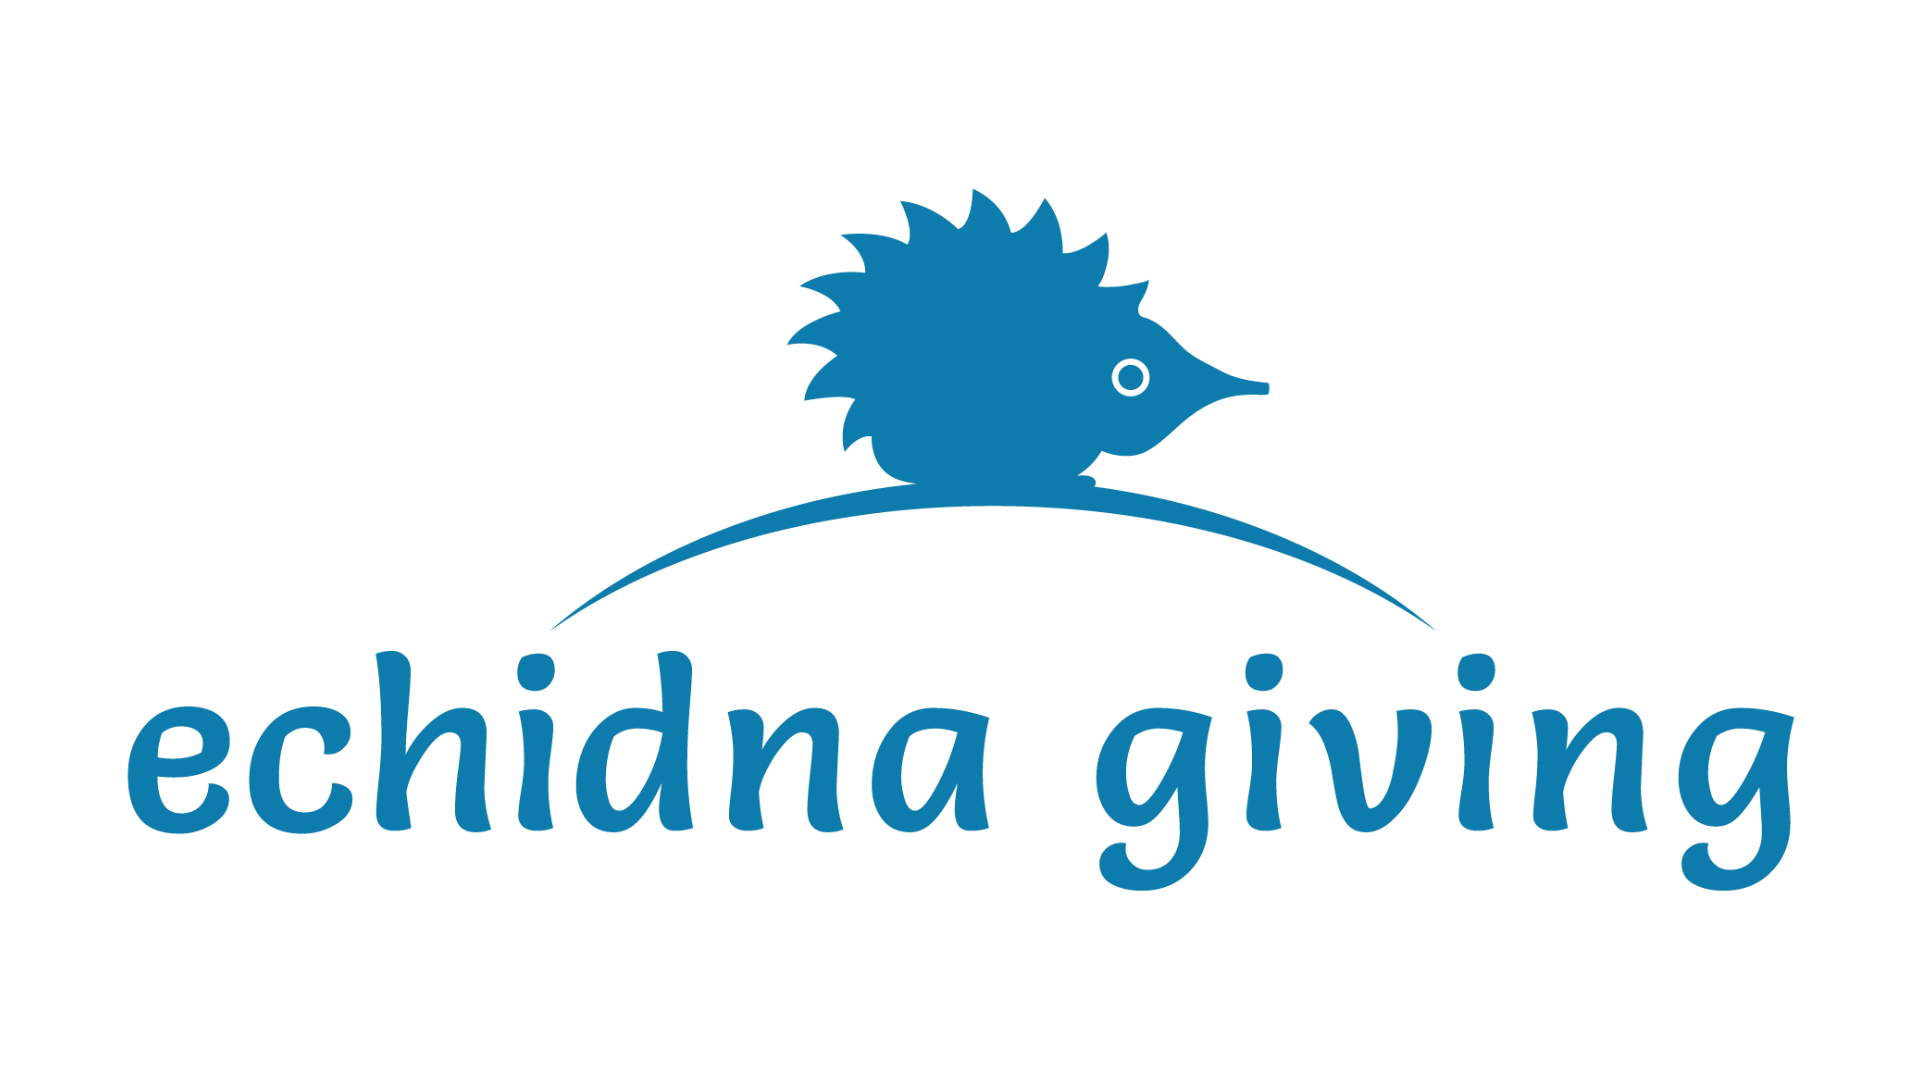 Echidna Giving logo